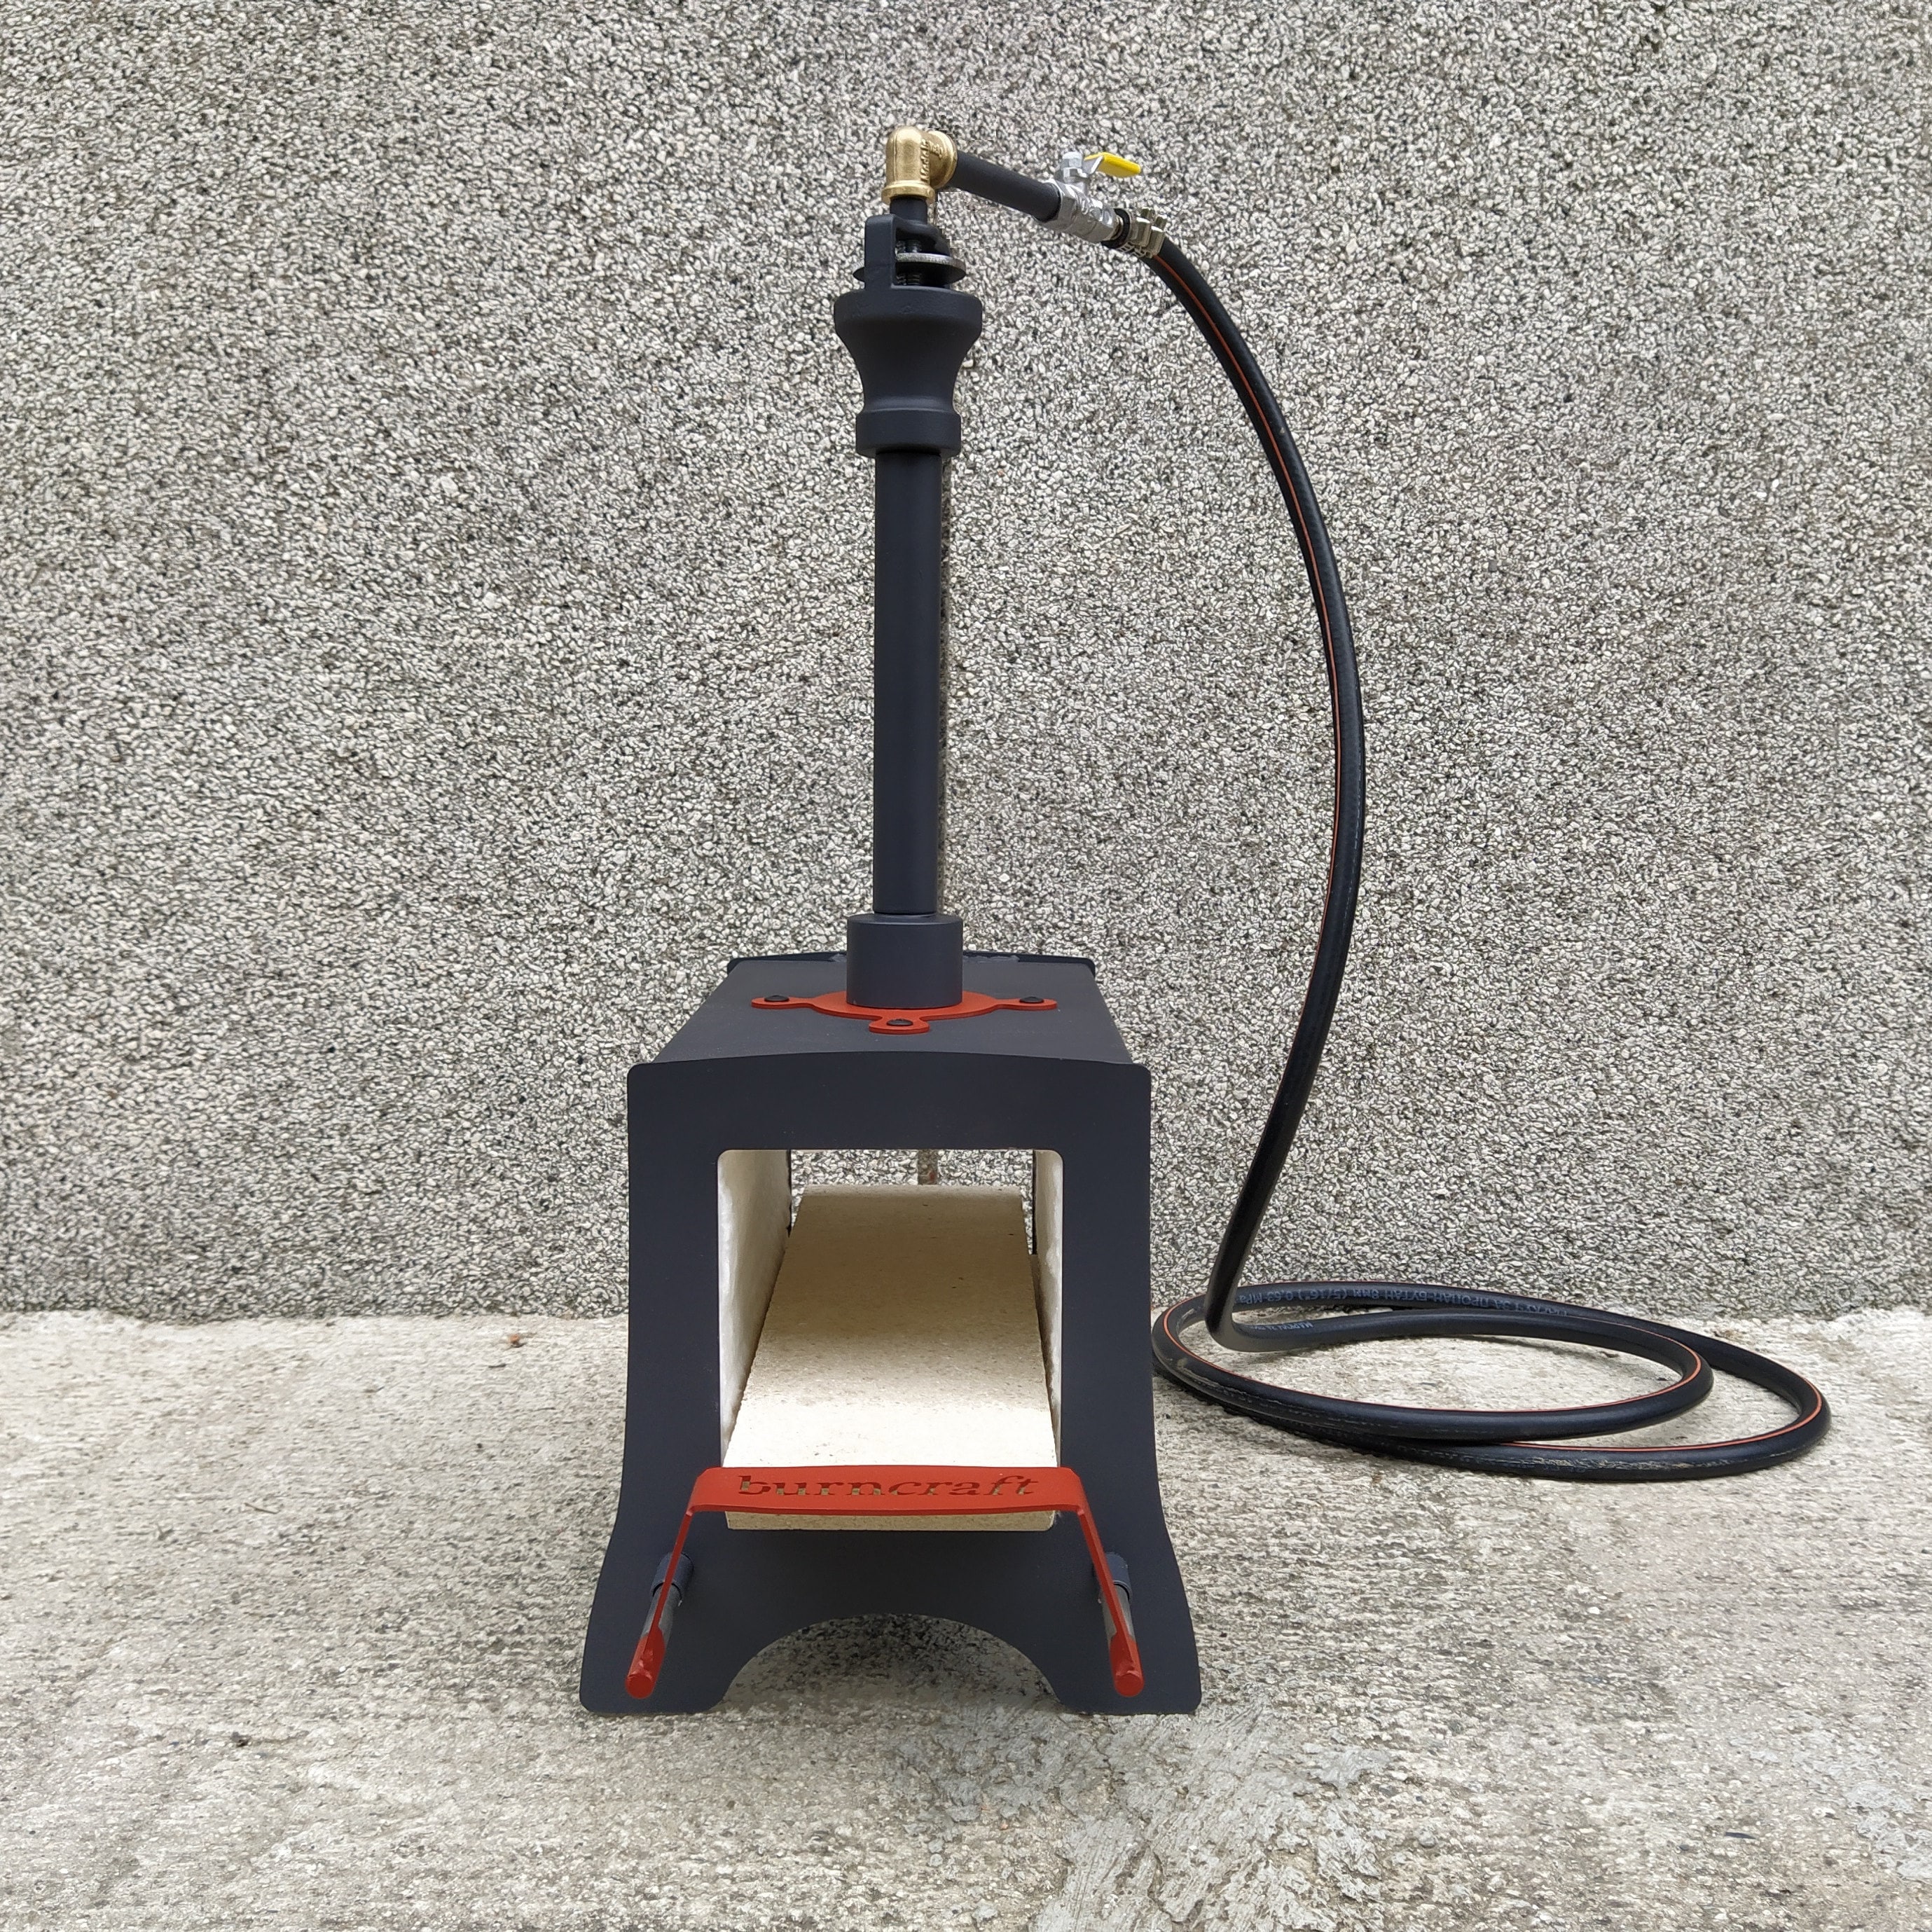 Gas Propane Forge Burner for Blacksmiths and Smelting by BURNCRAFT 